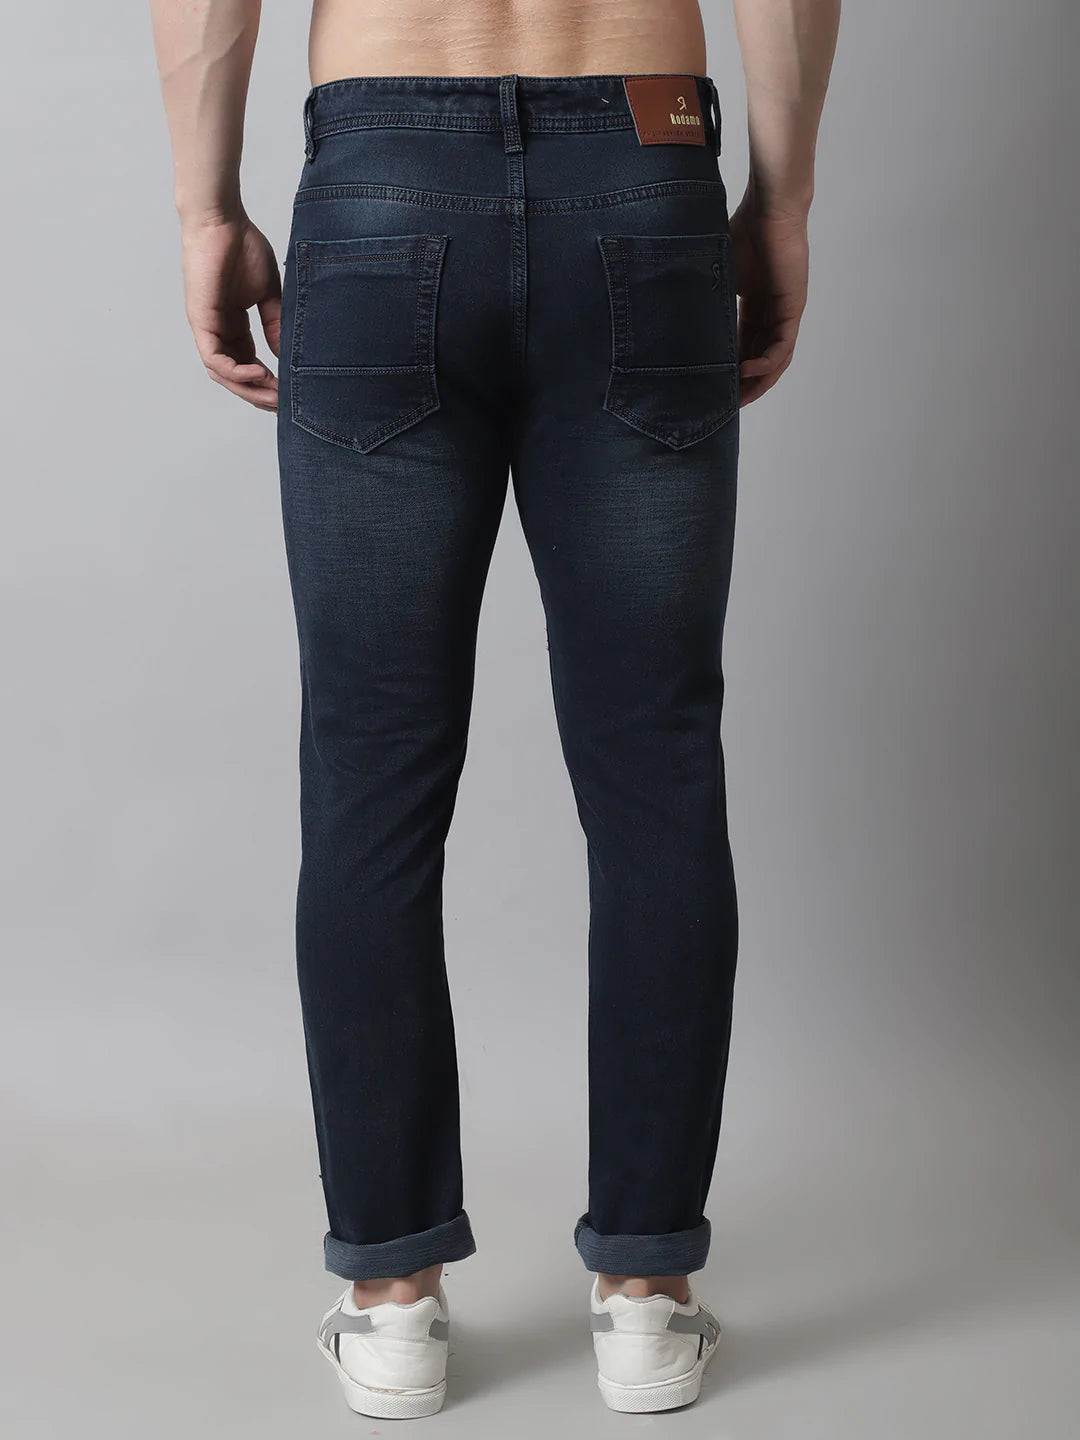 Buy Mens Black Cotton Skinny Denim Jeans Online | Merchant Marine